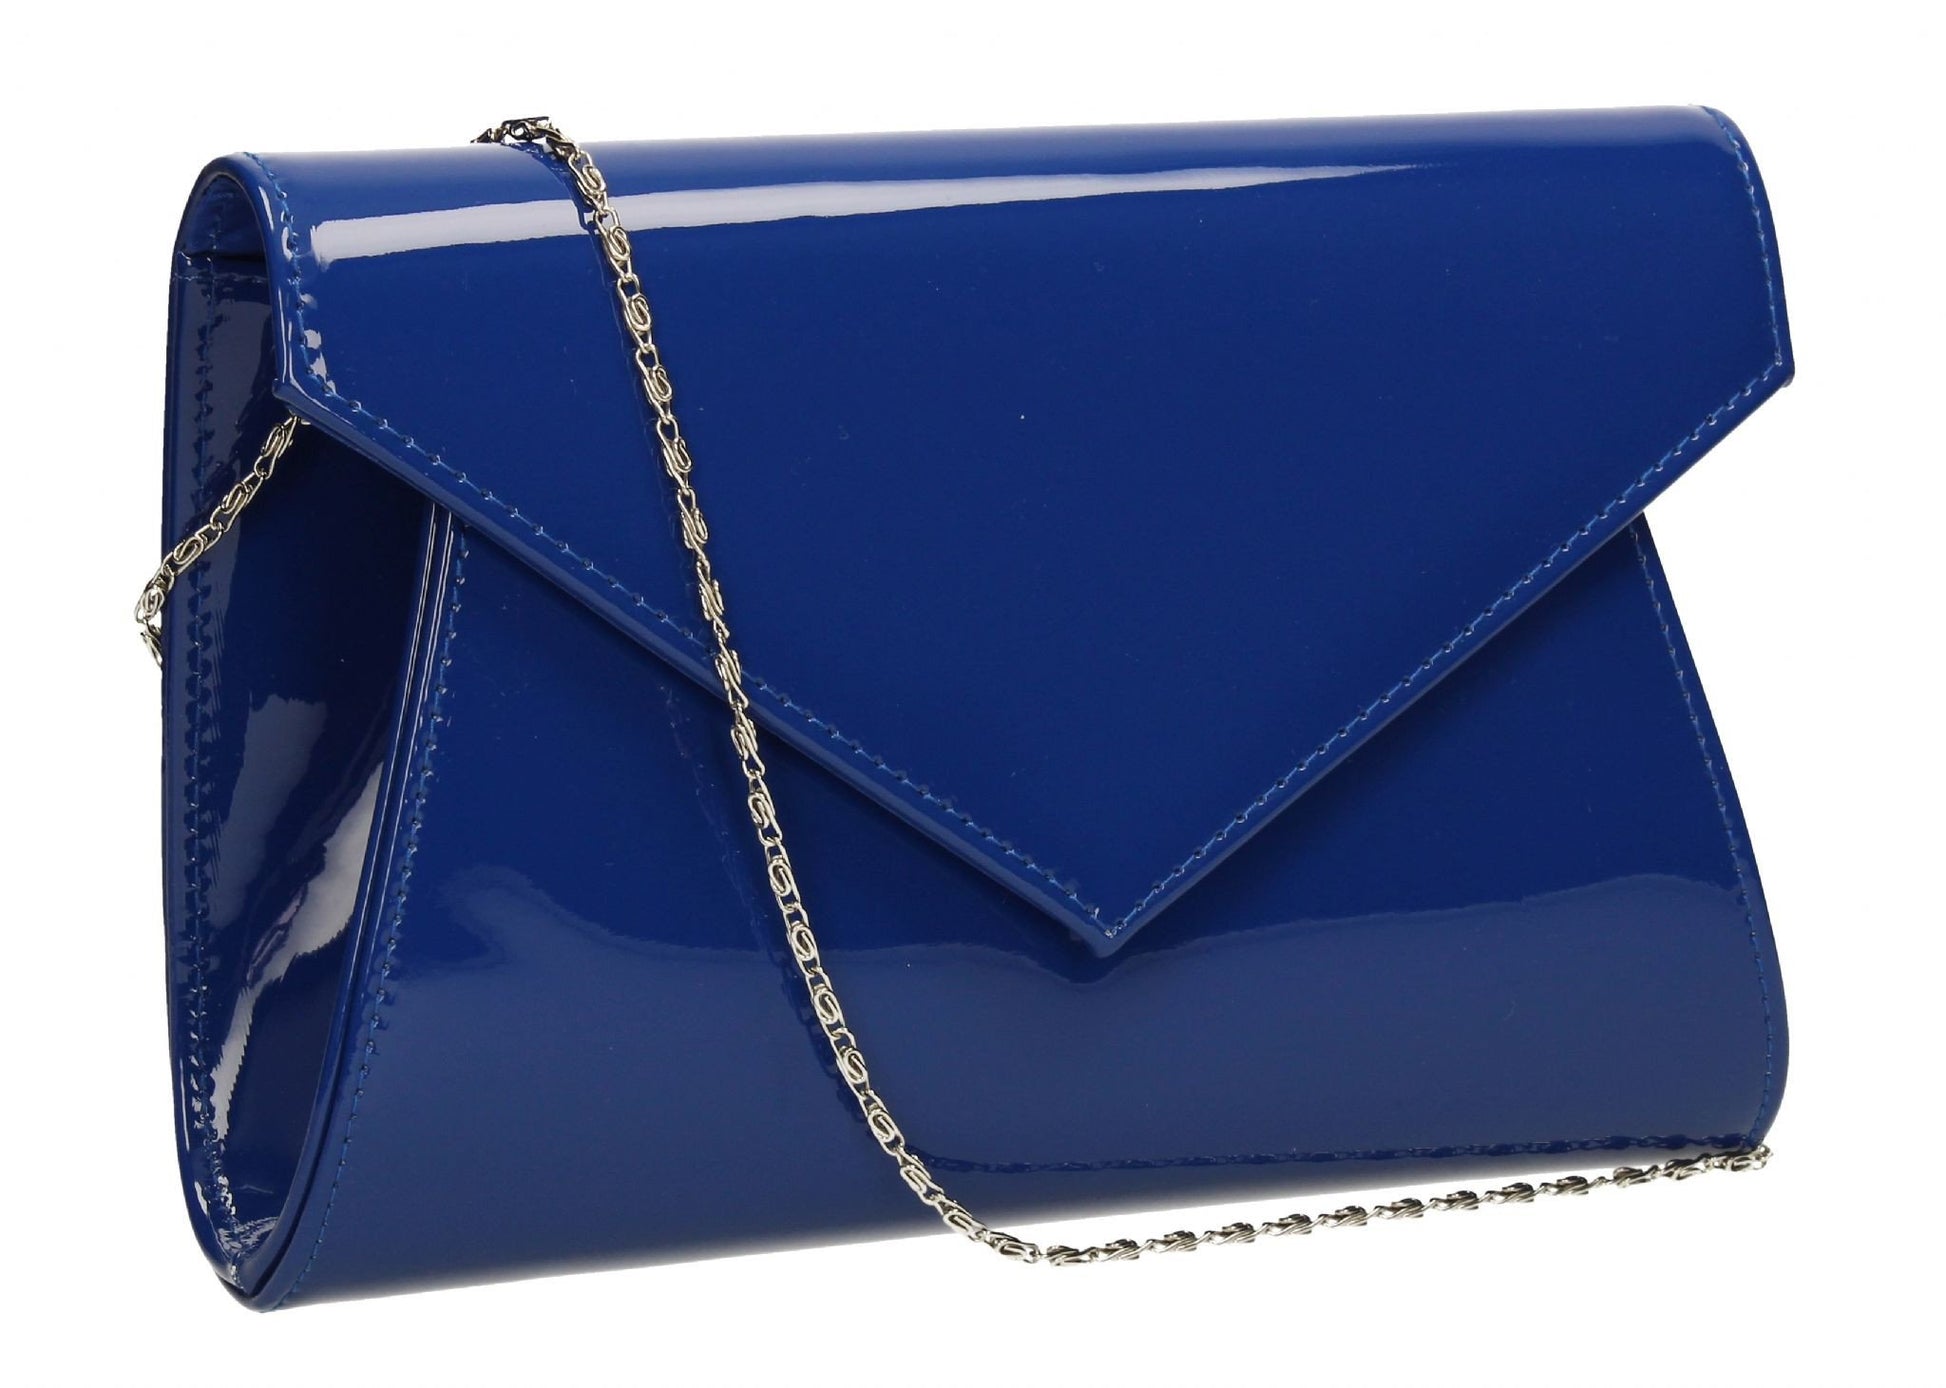 SWANKYSWANS Chrissy Envelope Clutch Bag Royal Blue Cute Cheap Clutch Bag For Weddings School and Work